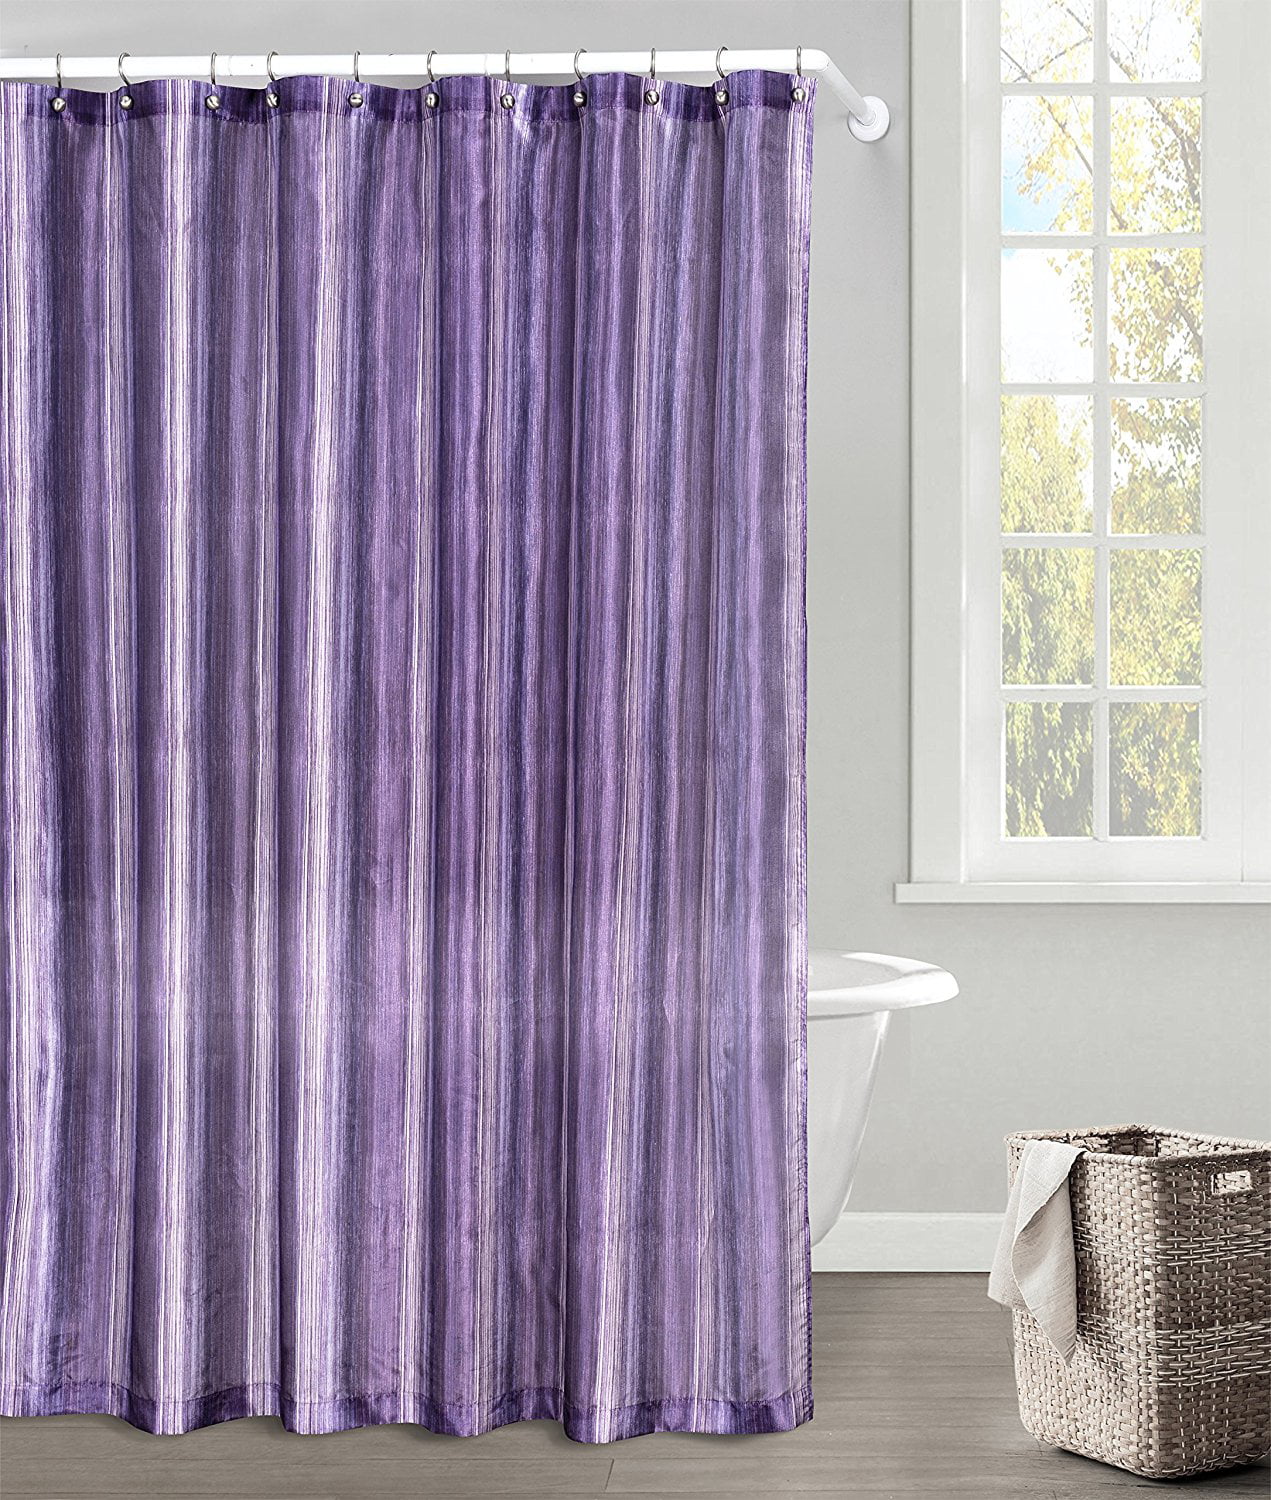 Multi Colored Ombre Shower Curtain, Ombre Shower Curtain Purple